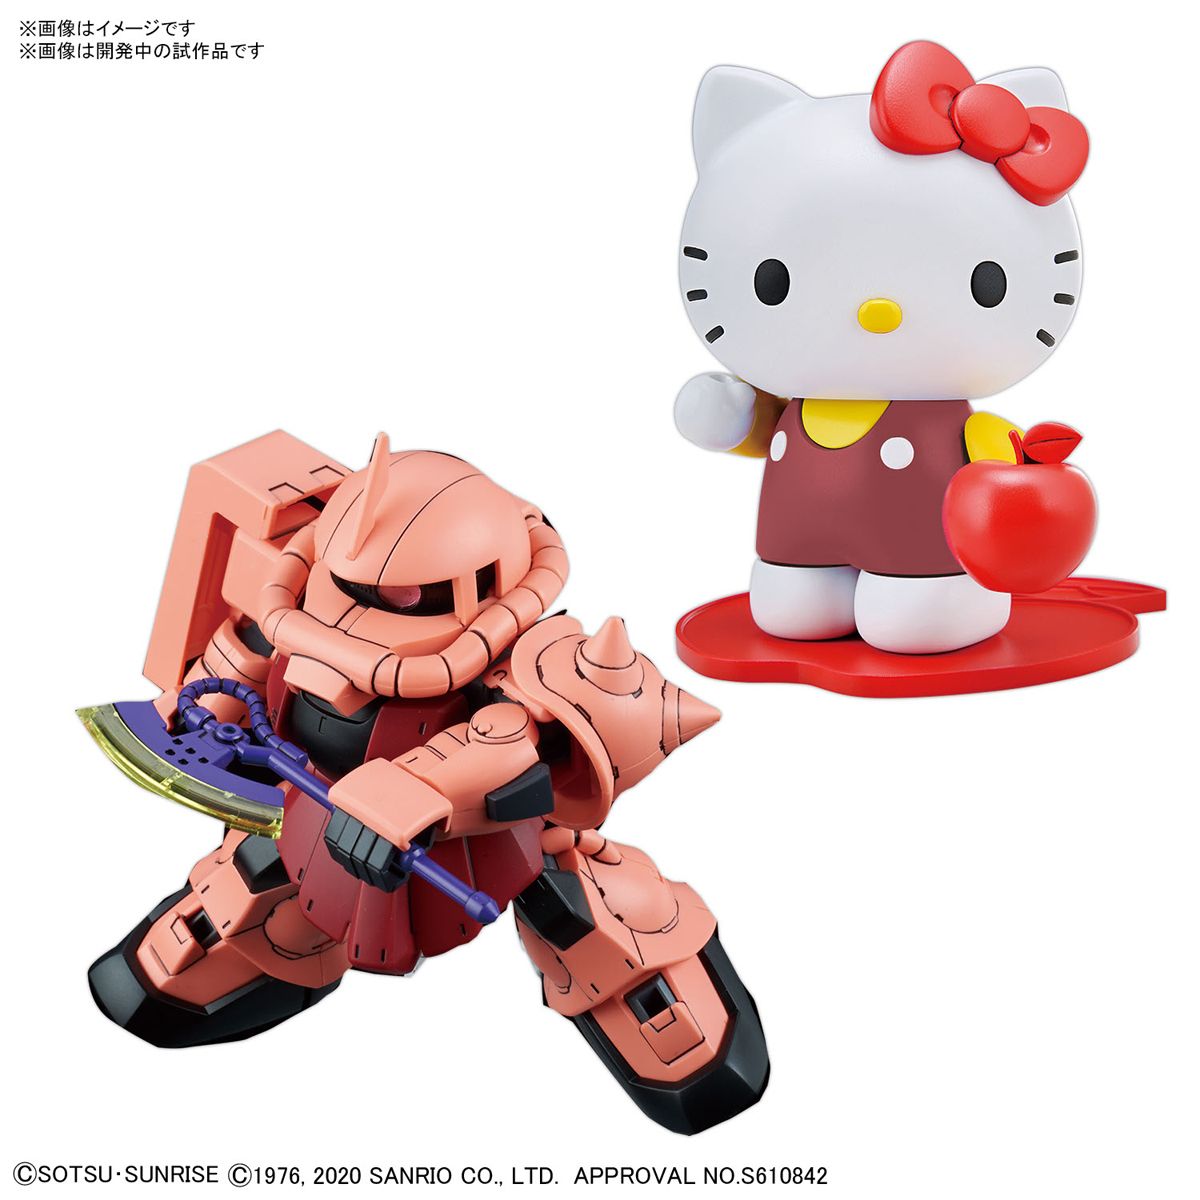 Gundam SDCS Cross Silouette Hello Kitty X MS-06S Char's Zaku II Model Kit